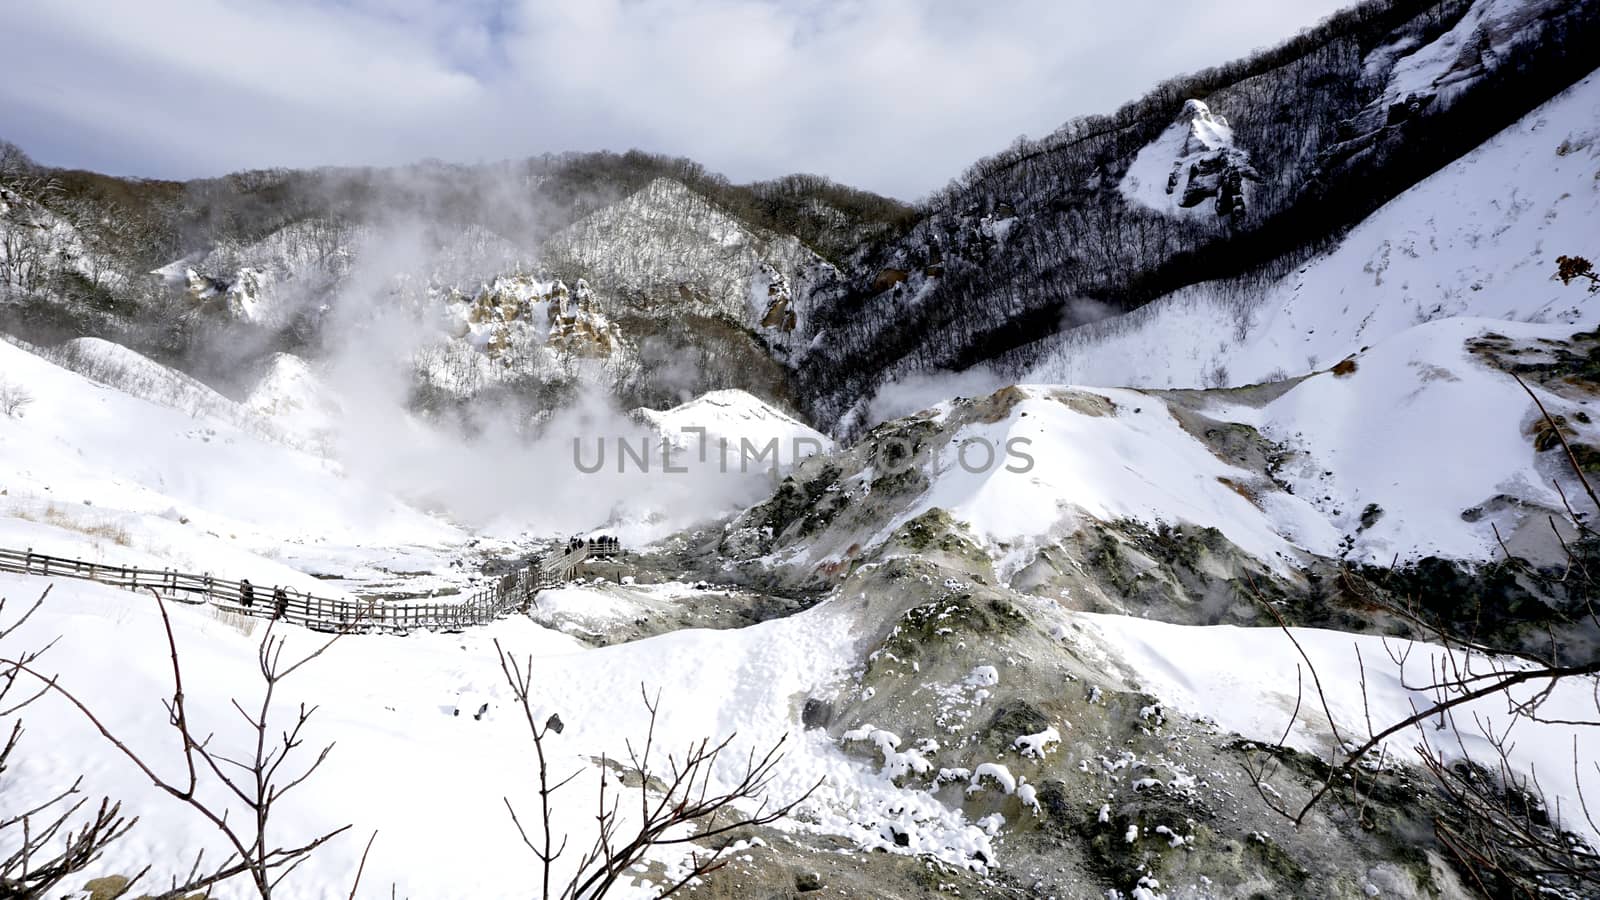 Noboribetsu onsen and bridge hell valley snow winter national park in Jigokudani, Hokkaido, Japan